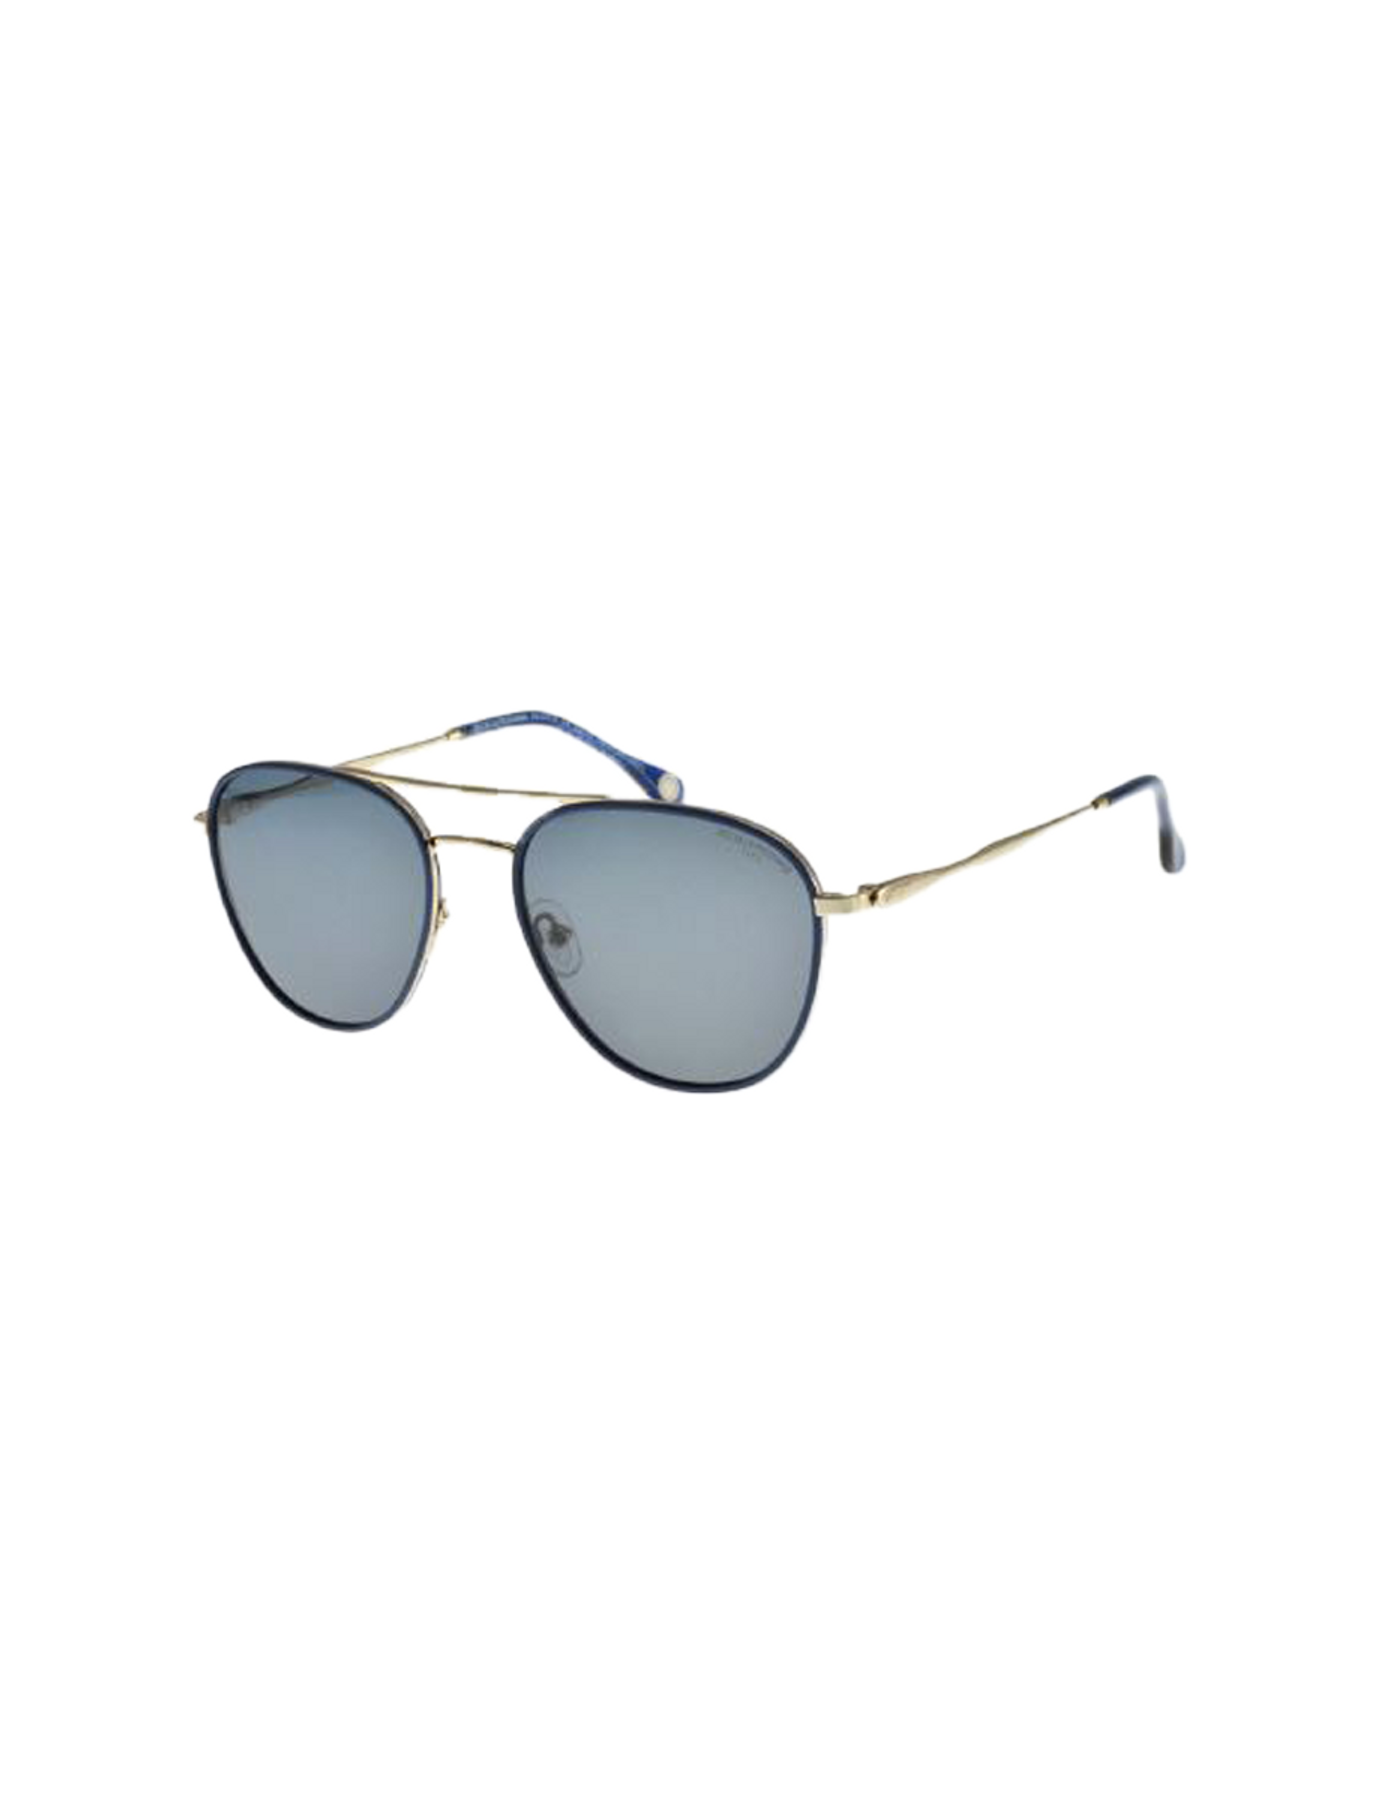 sunglasses-gold-blue